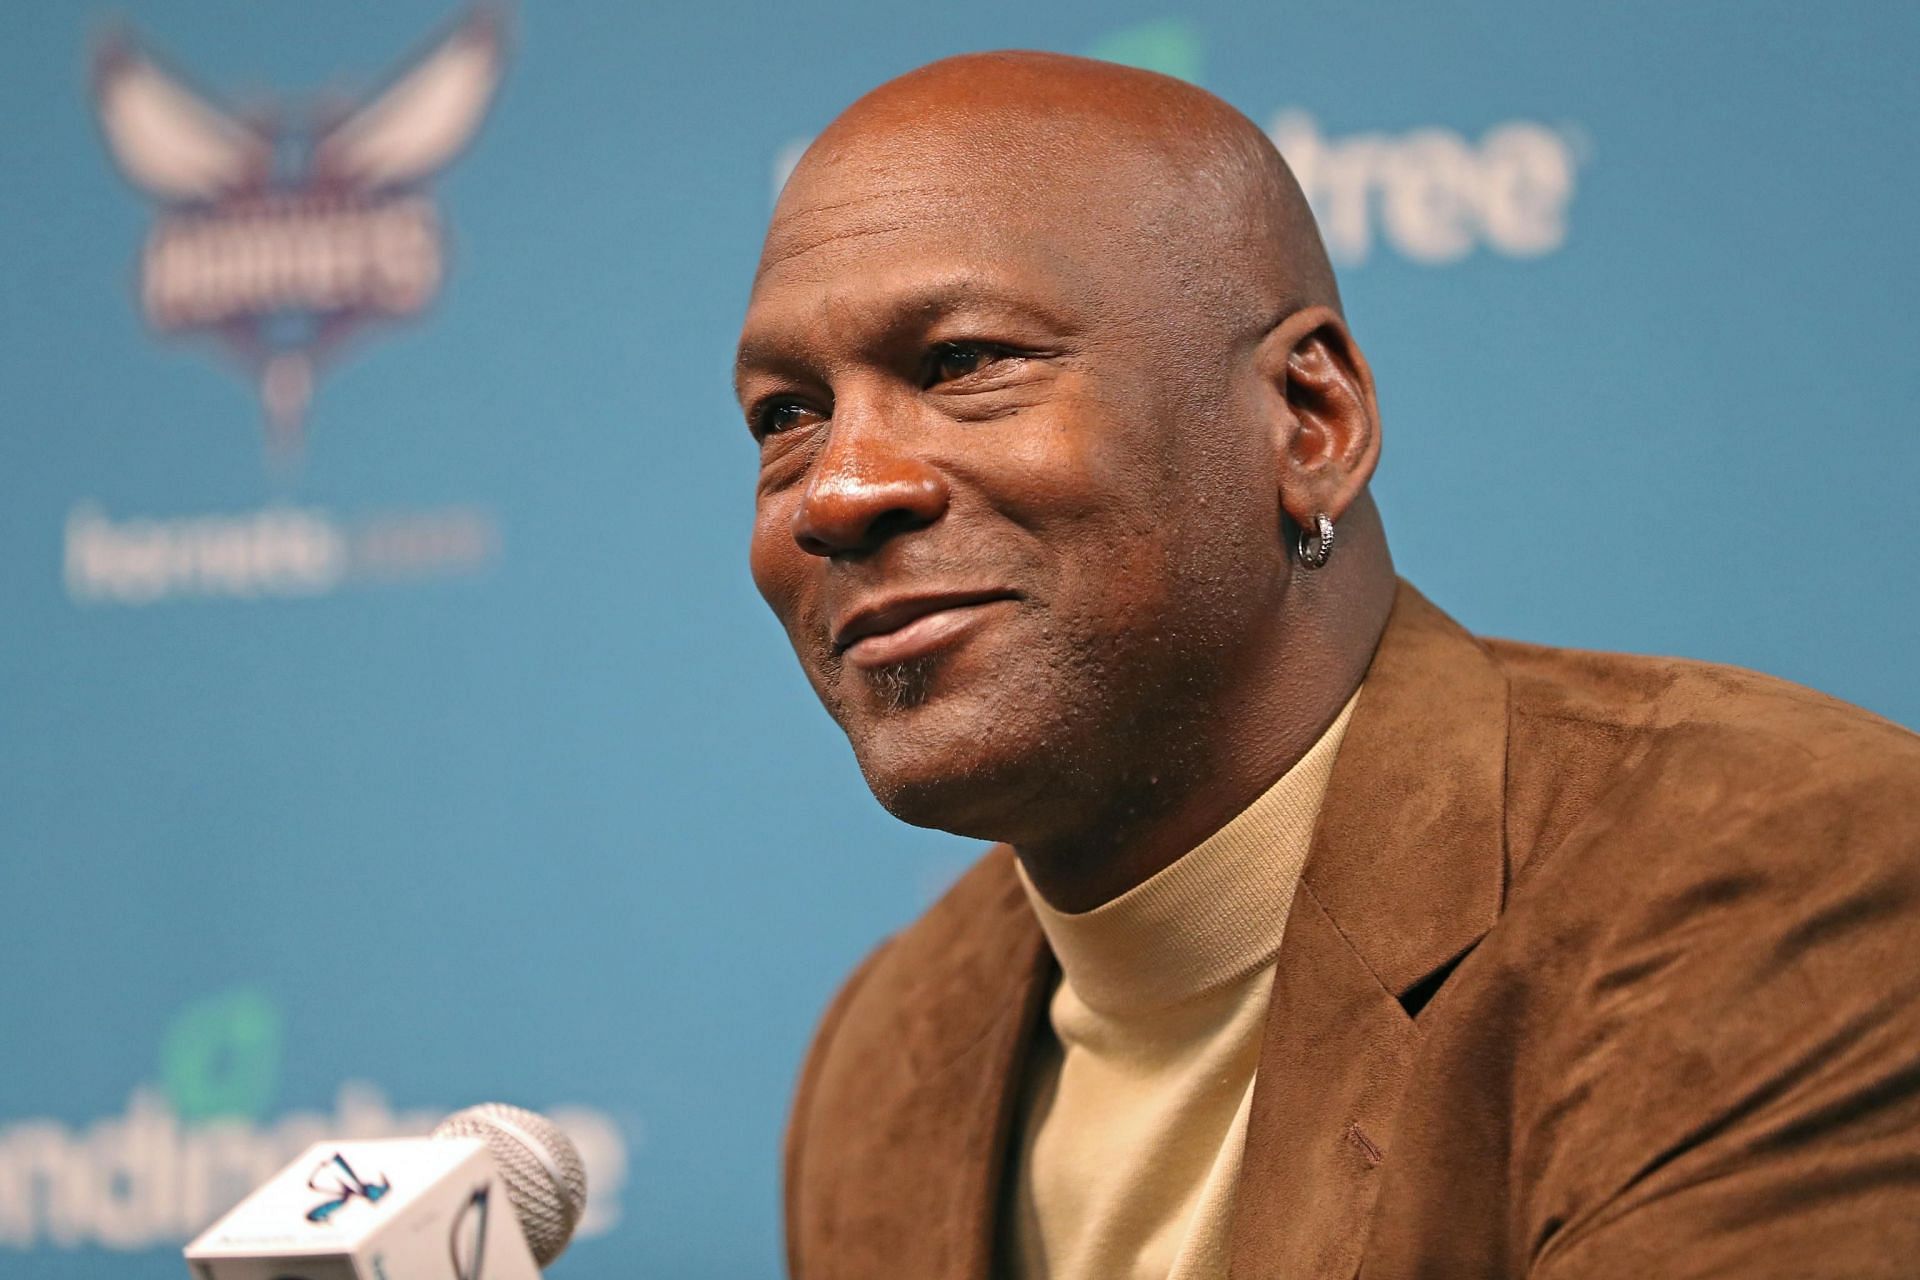 Charlotte Hornets owner and NBA legend Michael Jordan